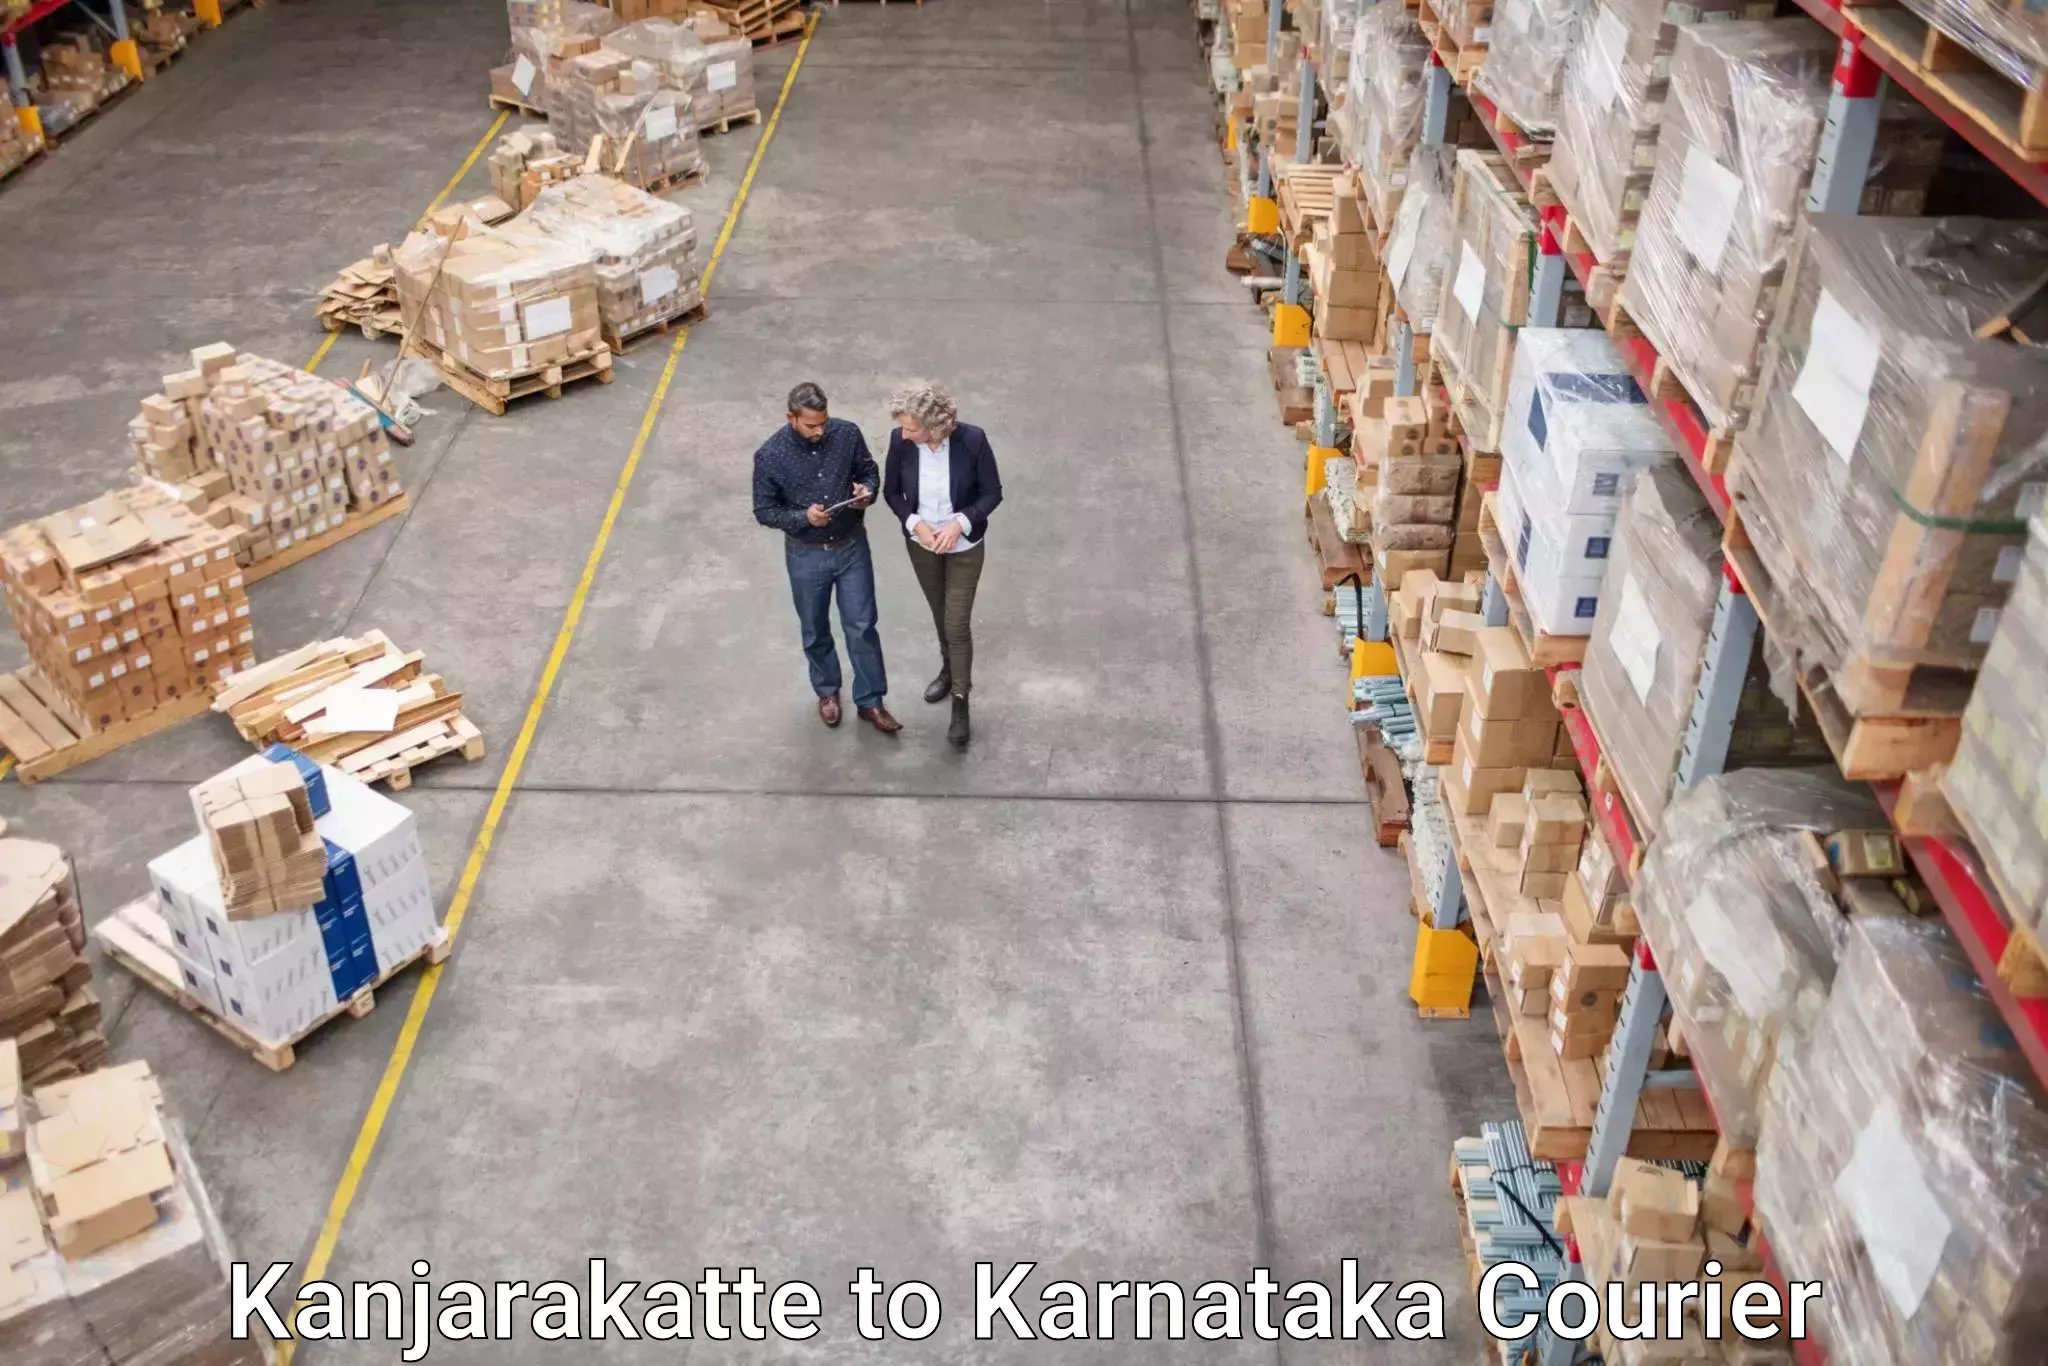 Courier service innovation Kanjarakatte to Karnataka